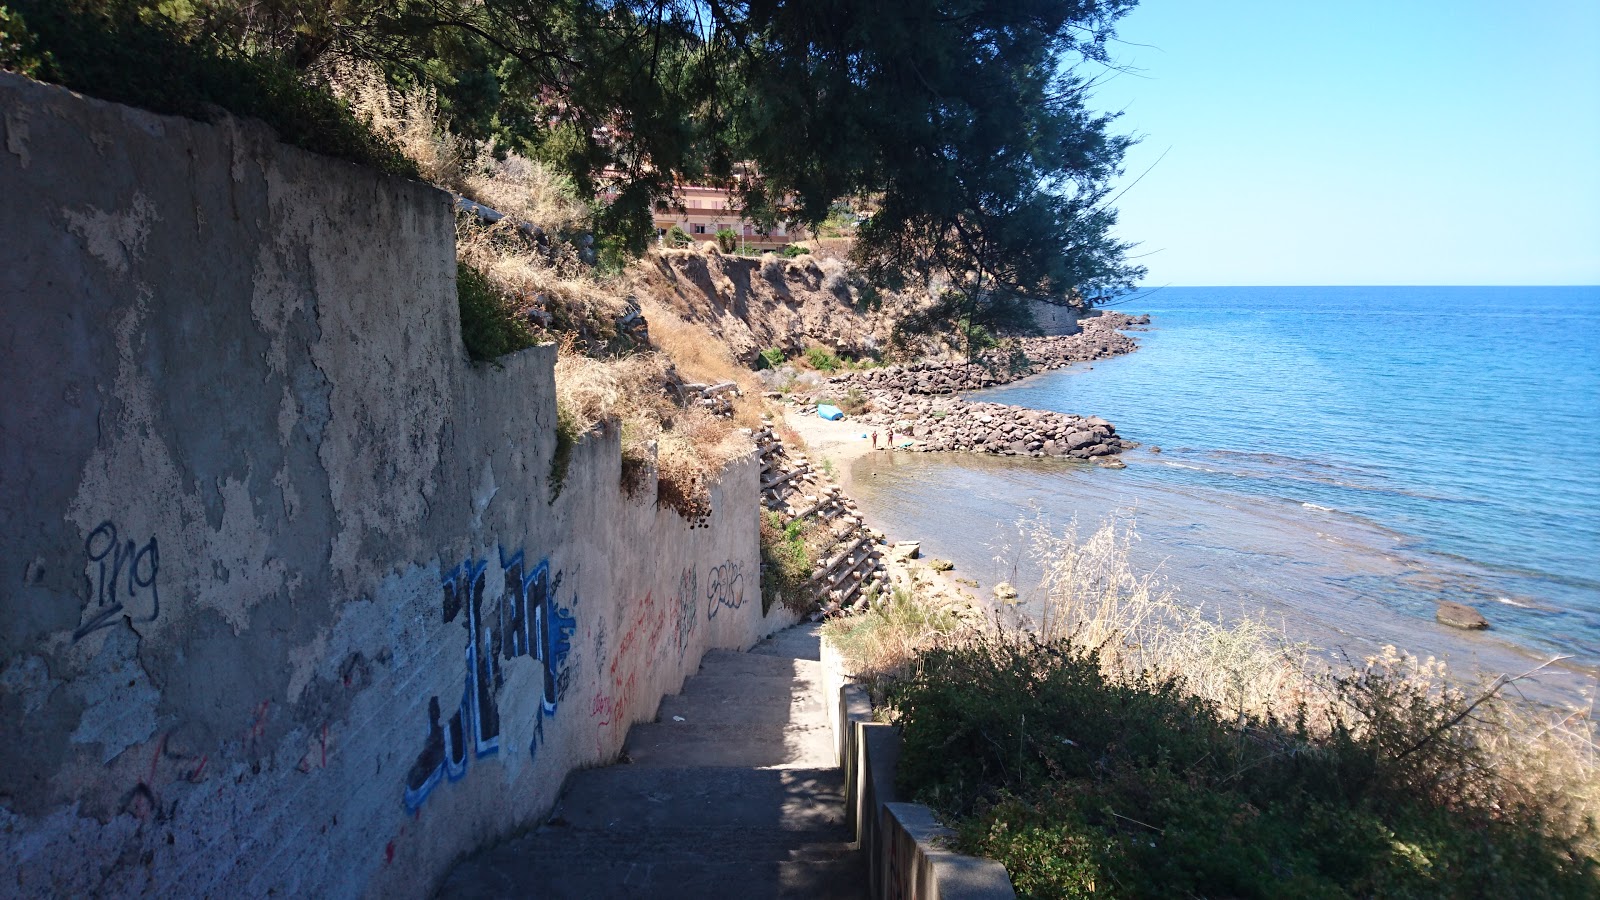 Foto van Spiaggia La Vignaccia met gemiddeld niveau van netheid